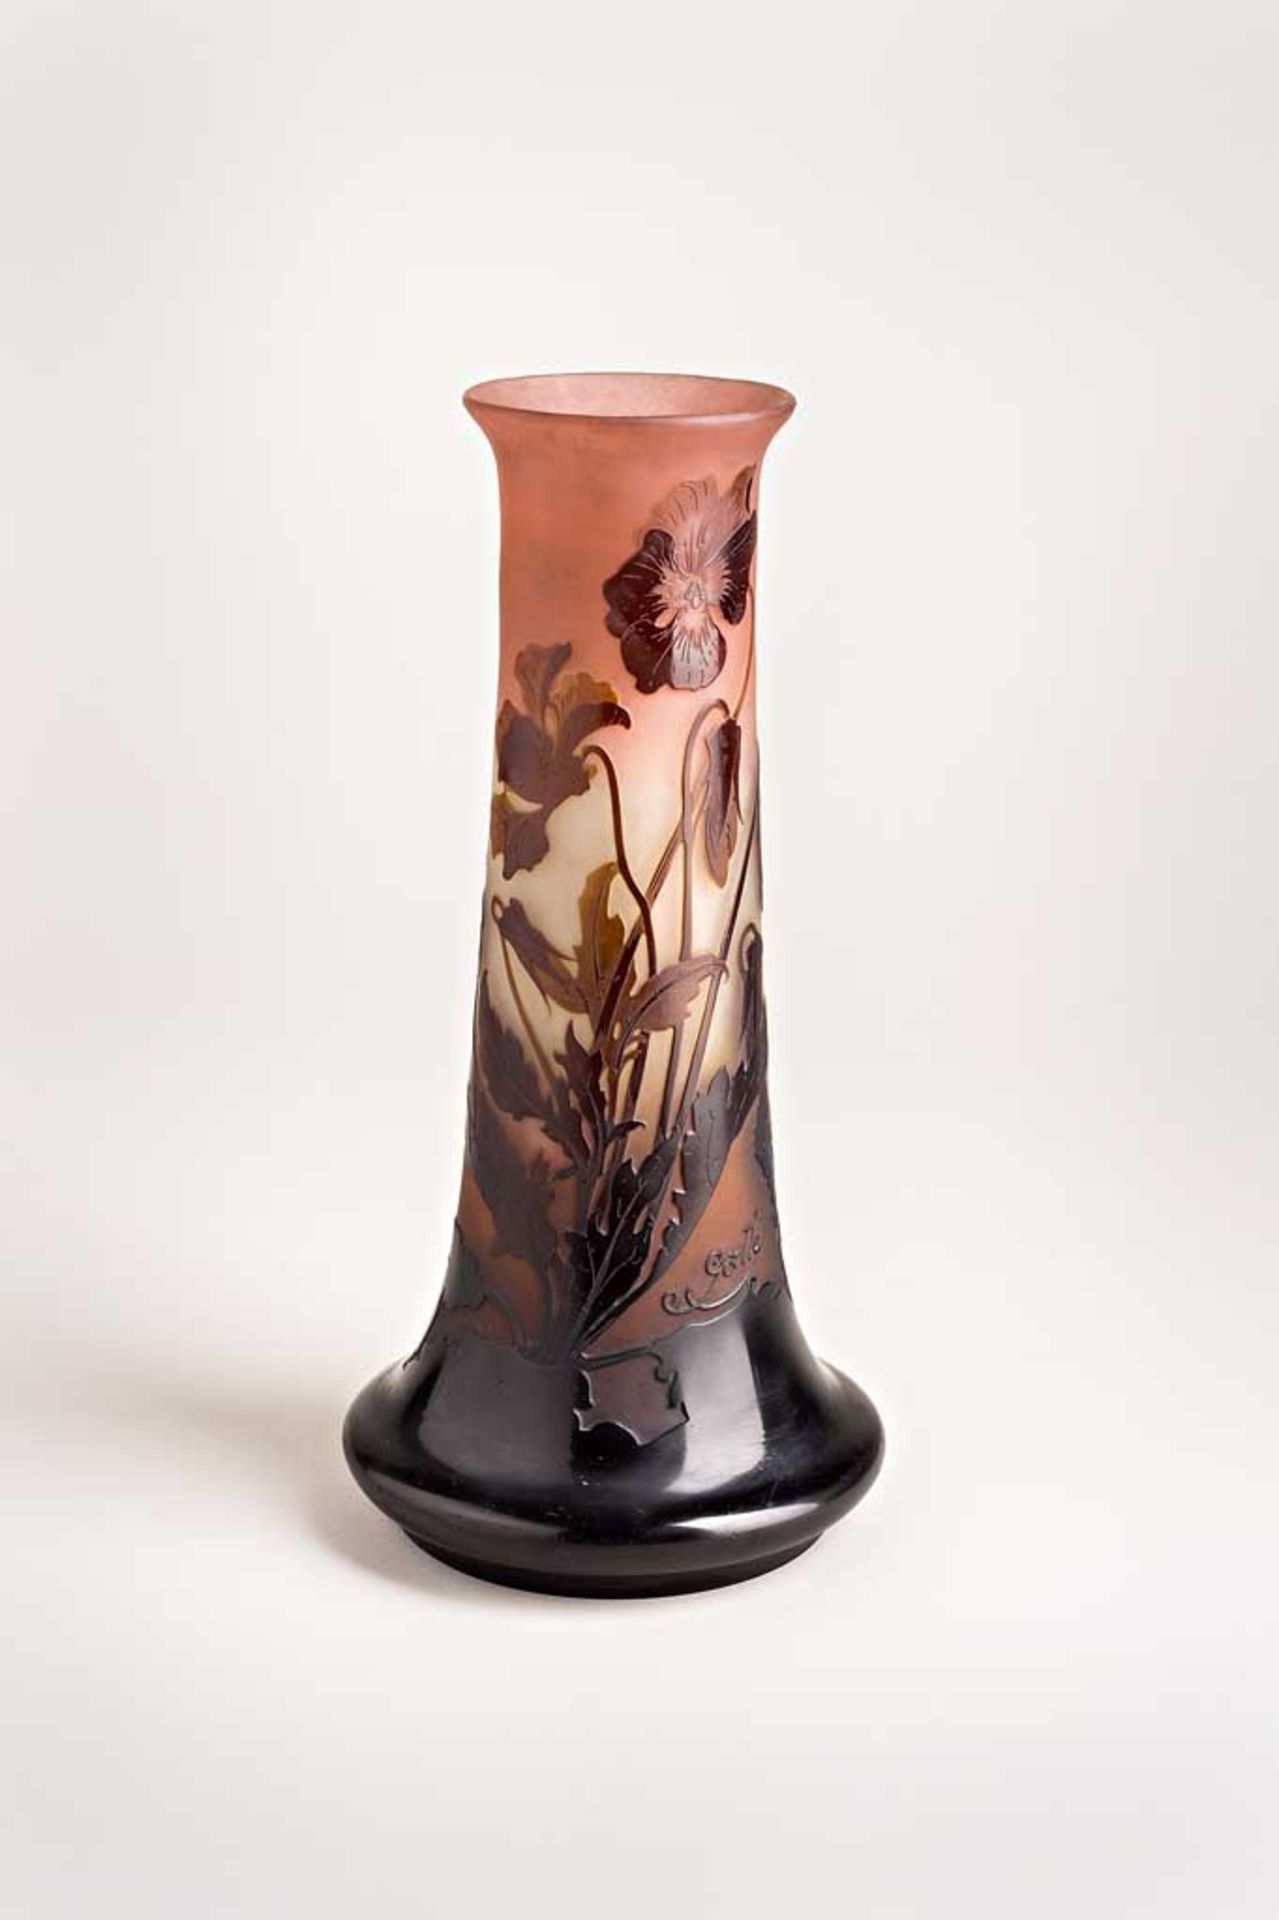 Gallé-Vase. Bez. Keulenform. Farbloses Glas mit dunkelrotem Überfang. Reliefdekor mit